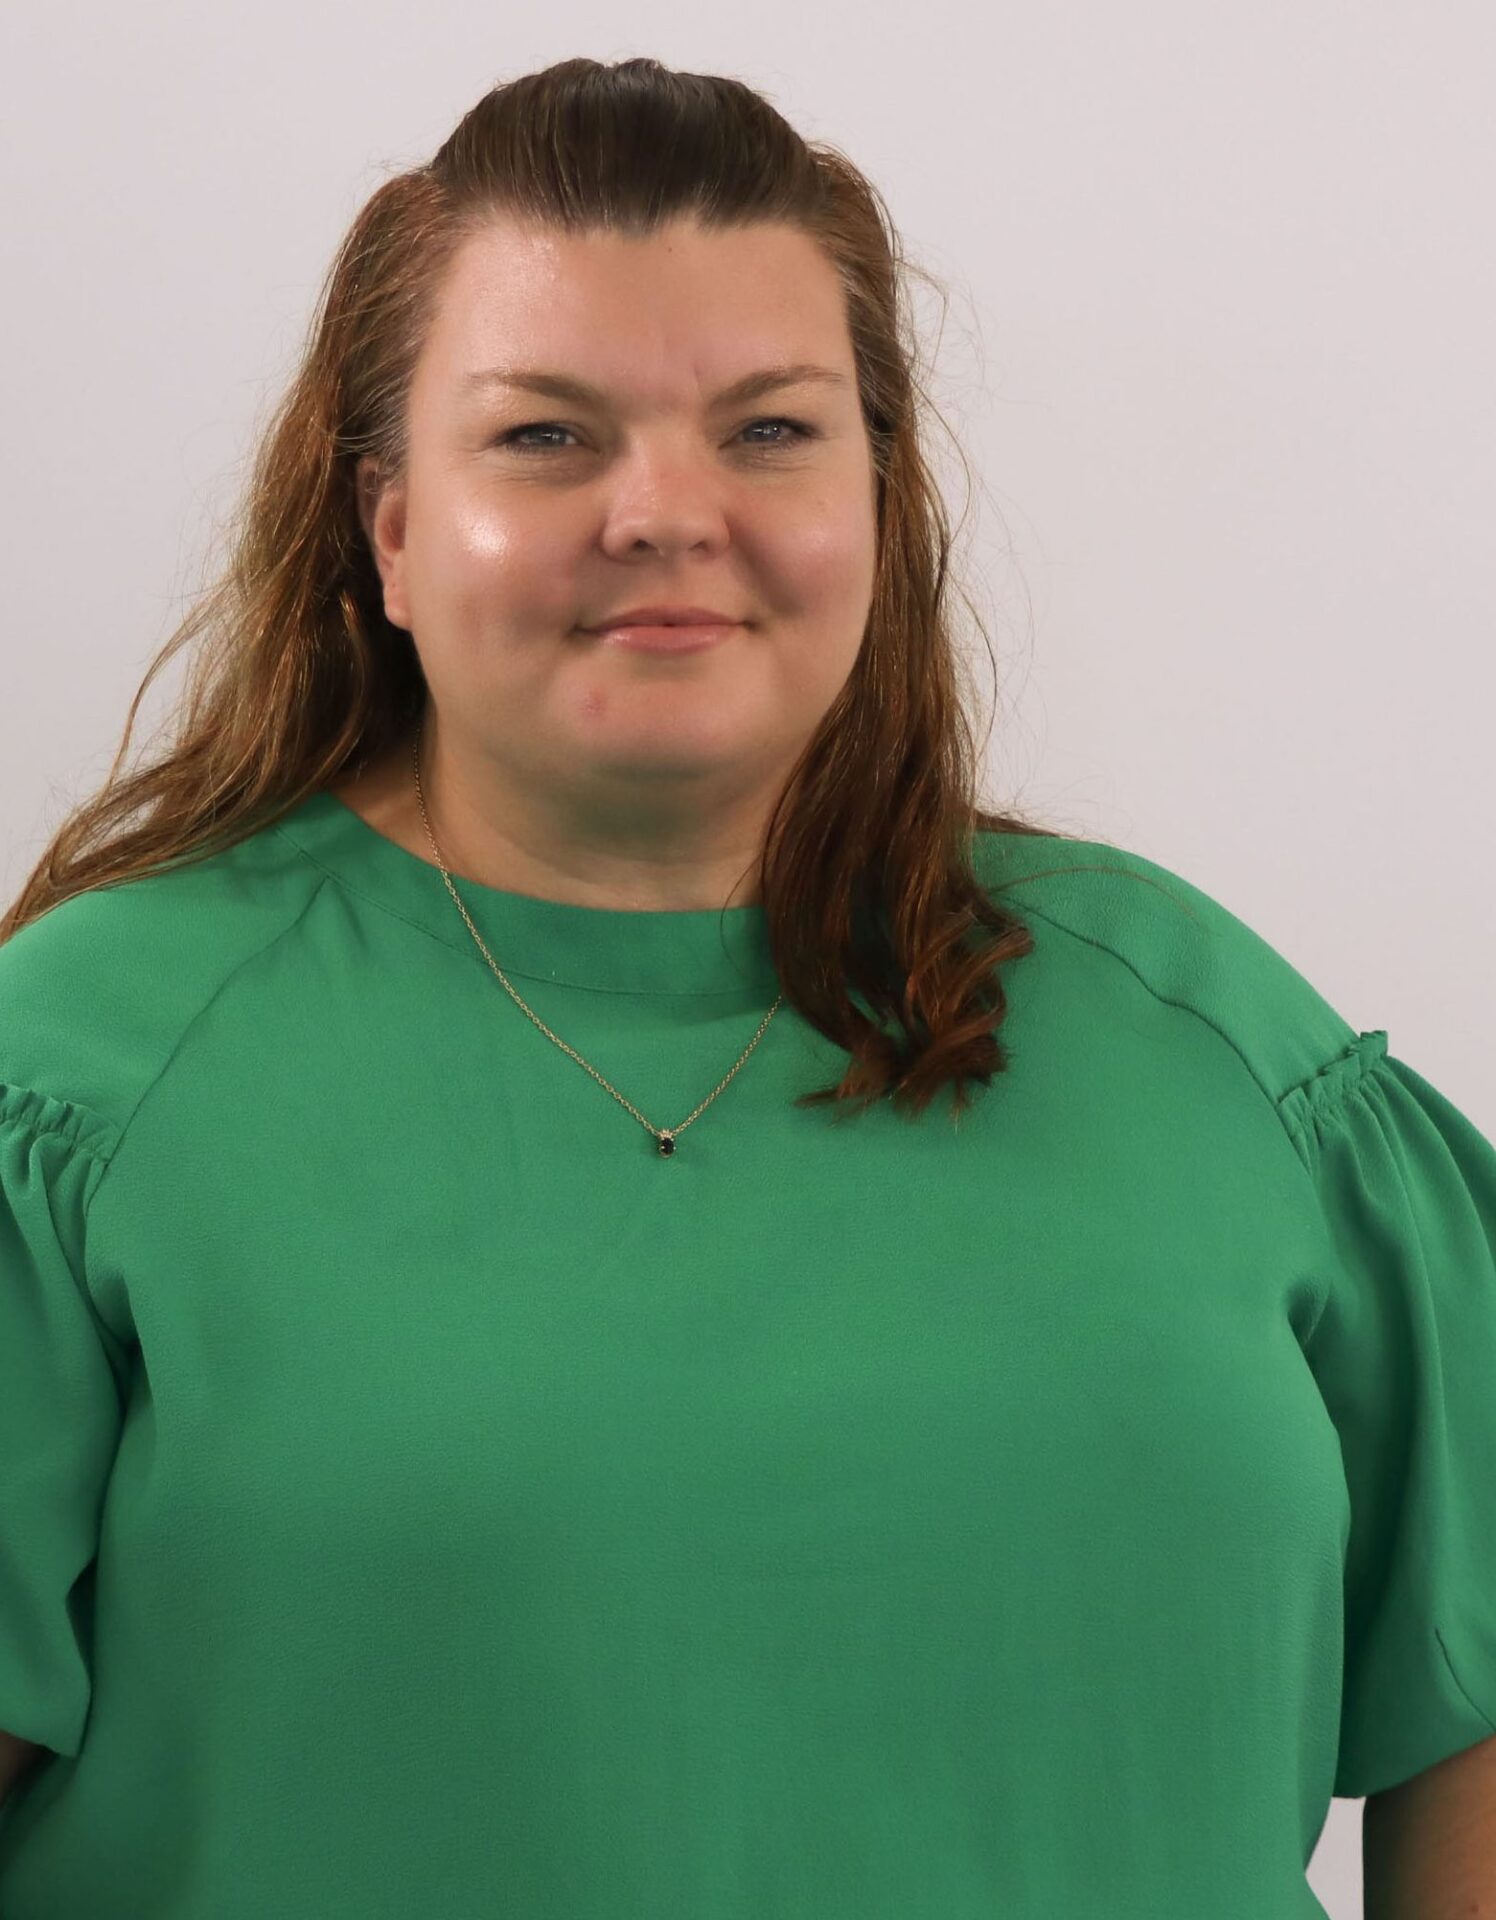 woman in green shirt smiling